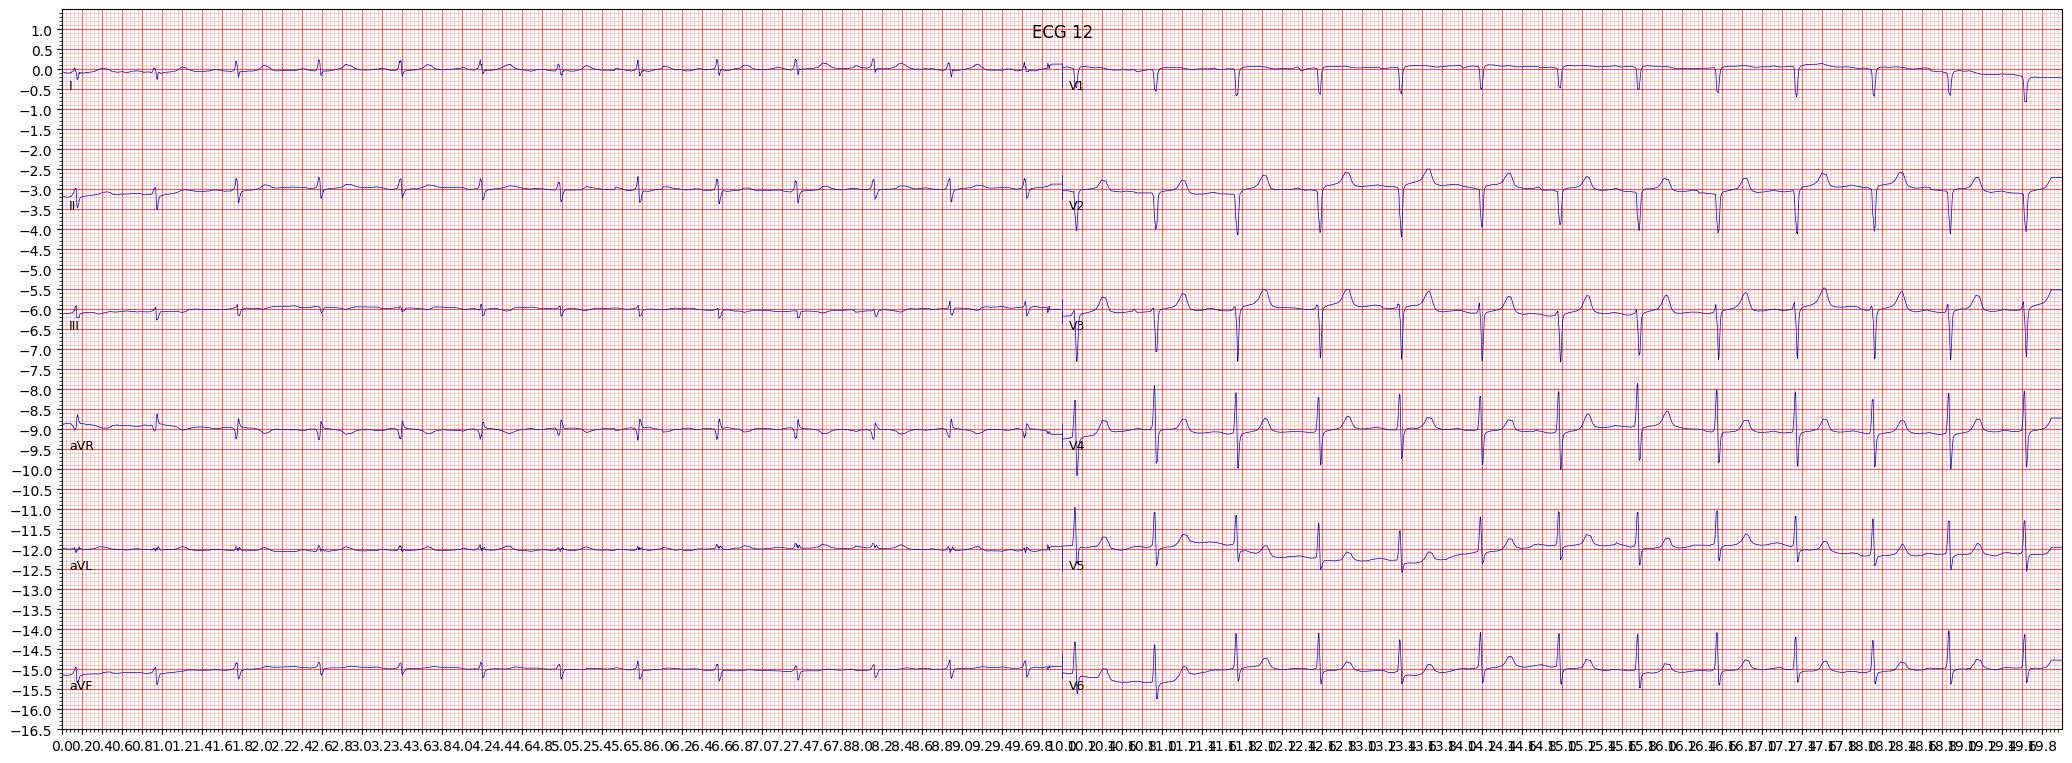 anteroseptal myocardial infarction (ASMI) example 492